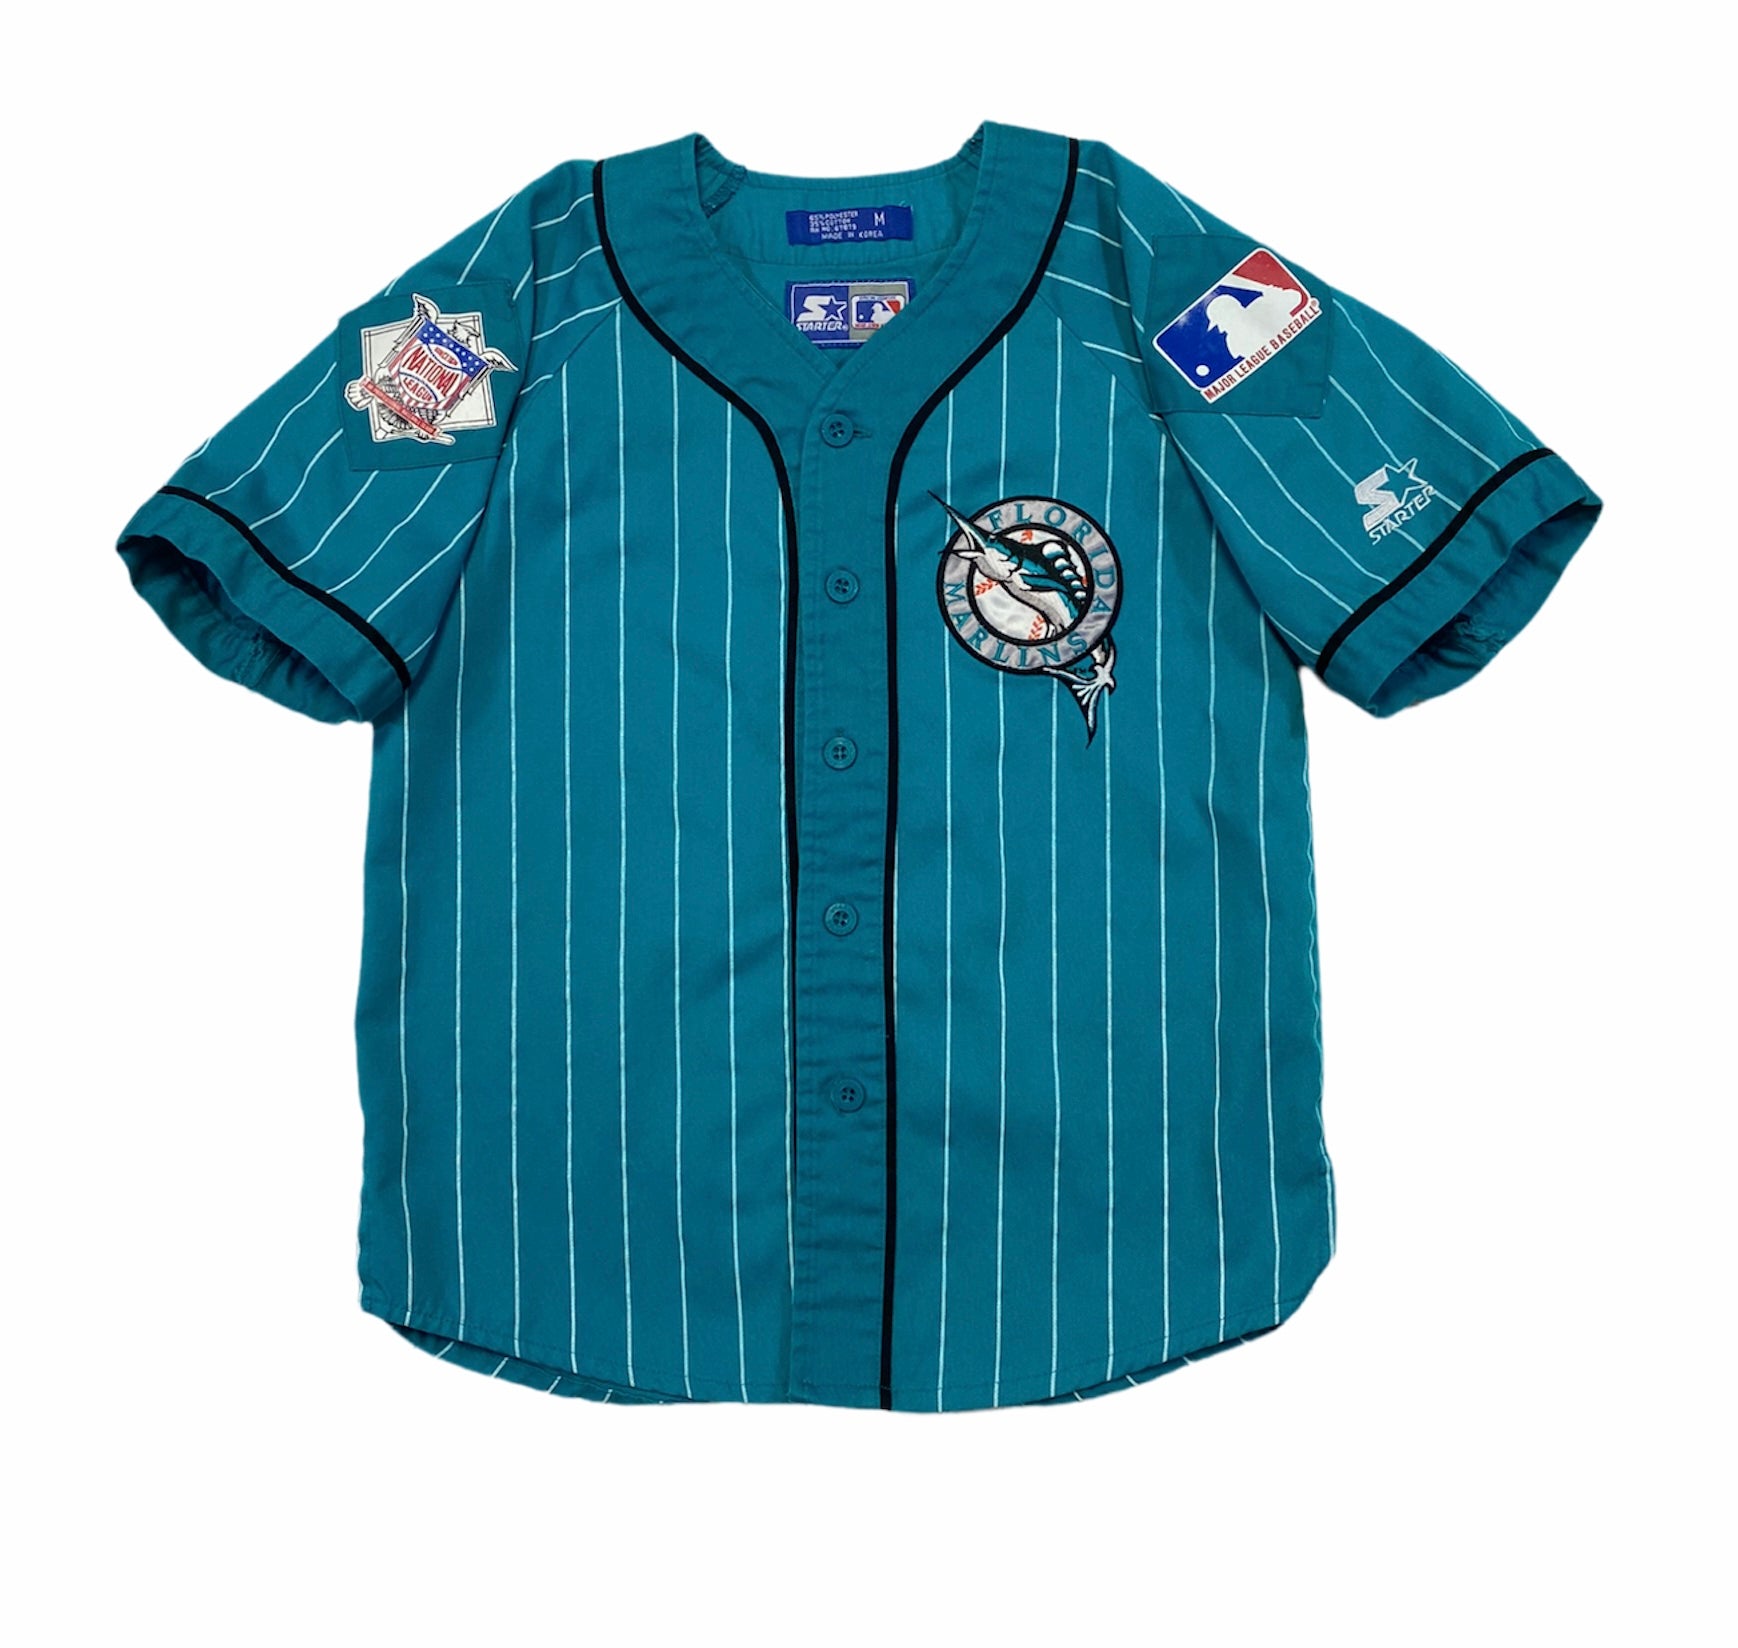 Vintage 1990s Oakland Athletics MLB Baseball Starter Jersey / 90s Jersey / Sportswear / Patchwork / Green Jersey / Vintage Starter